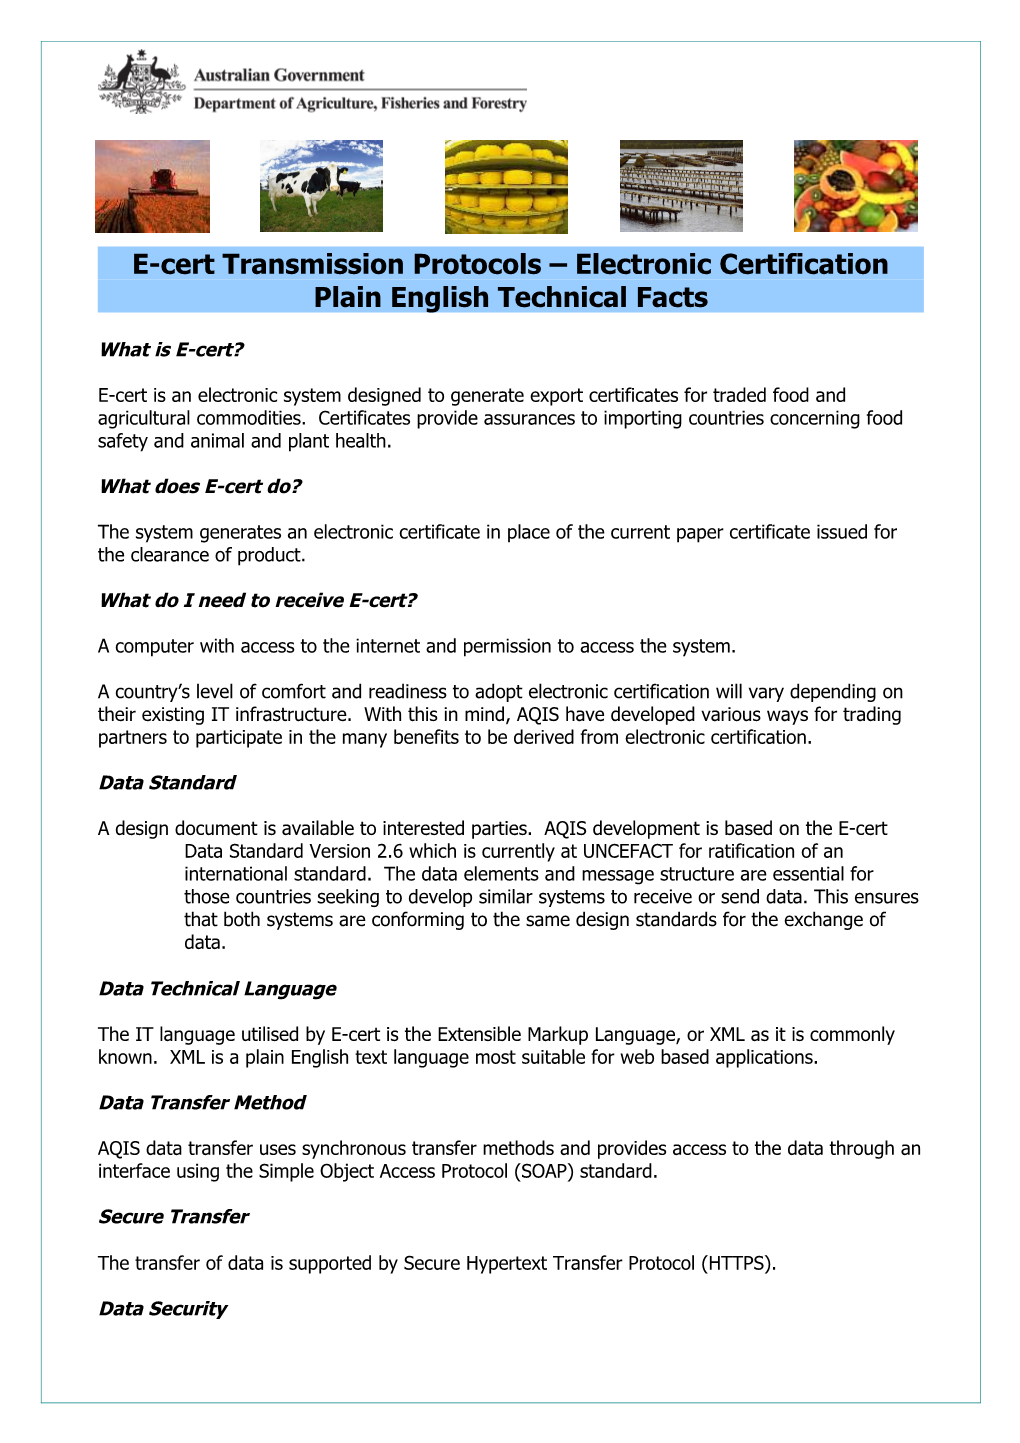 E-Cert Transmission Protocols Electronic Certification